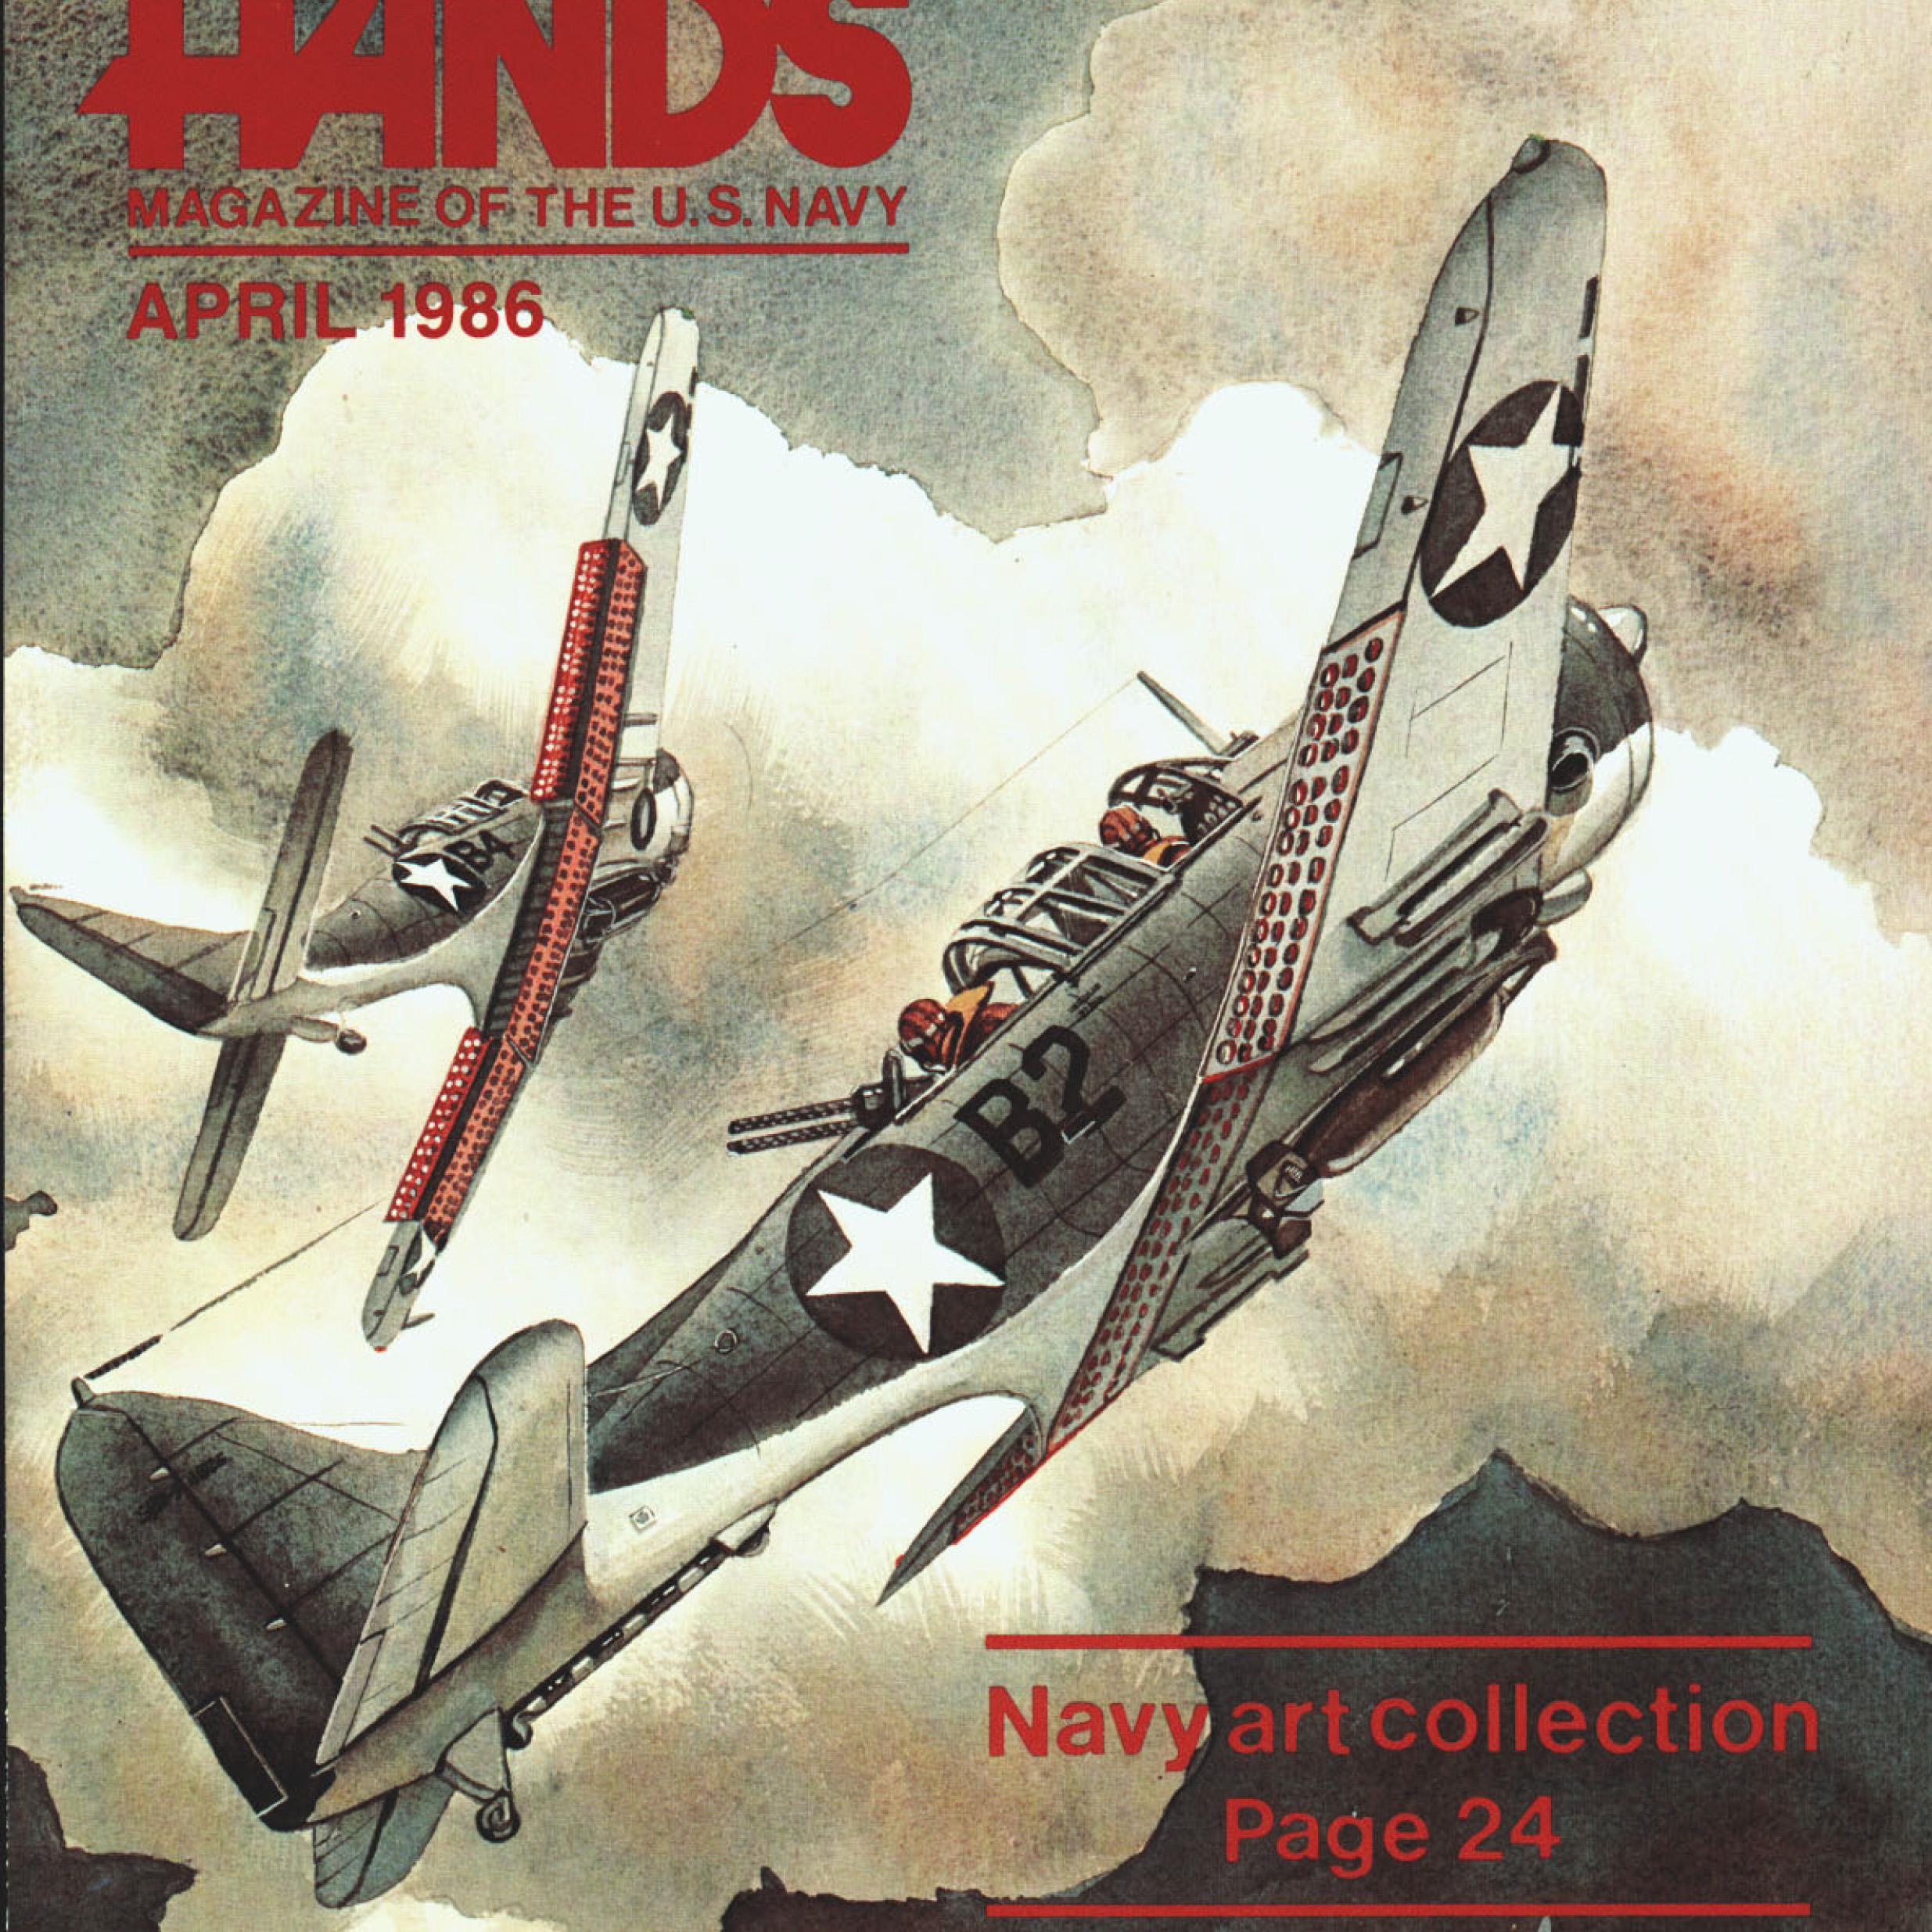 Image of vintage magazine artwork